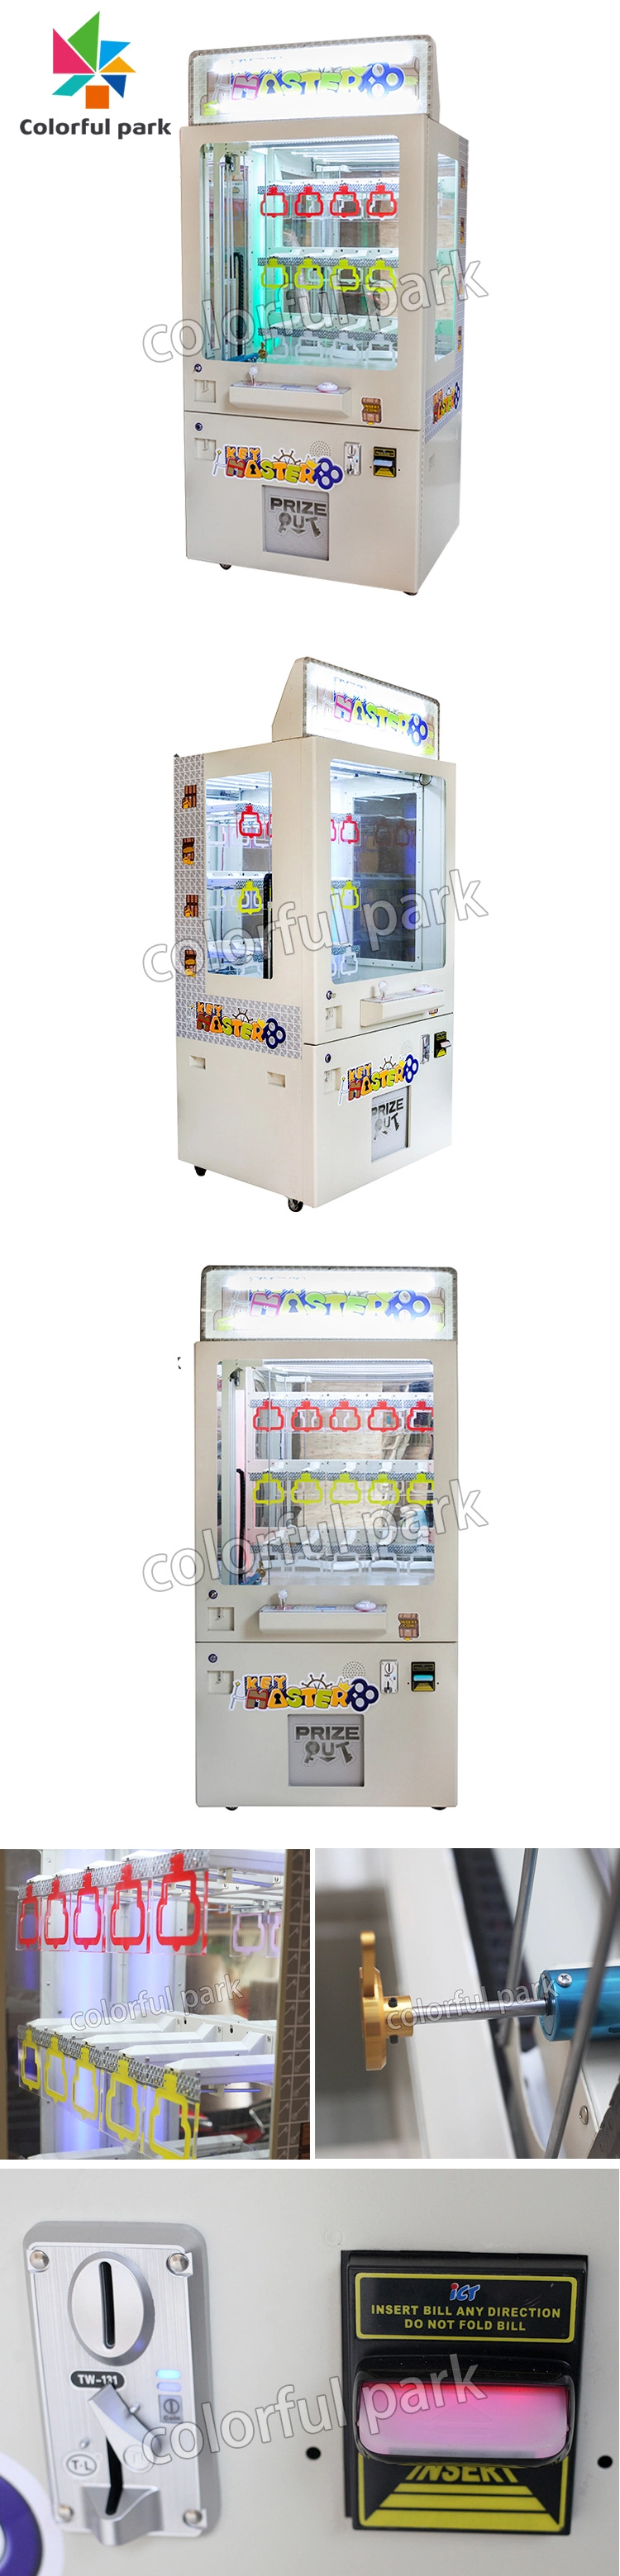 Colorful Park China Key Master Brazil Key Master Arcade Gift Machine Arcade Game for Sale